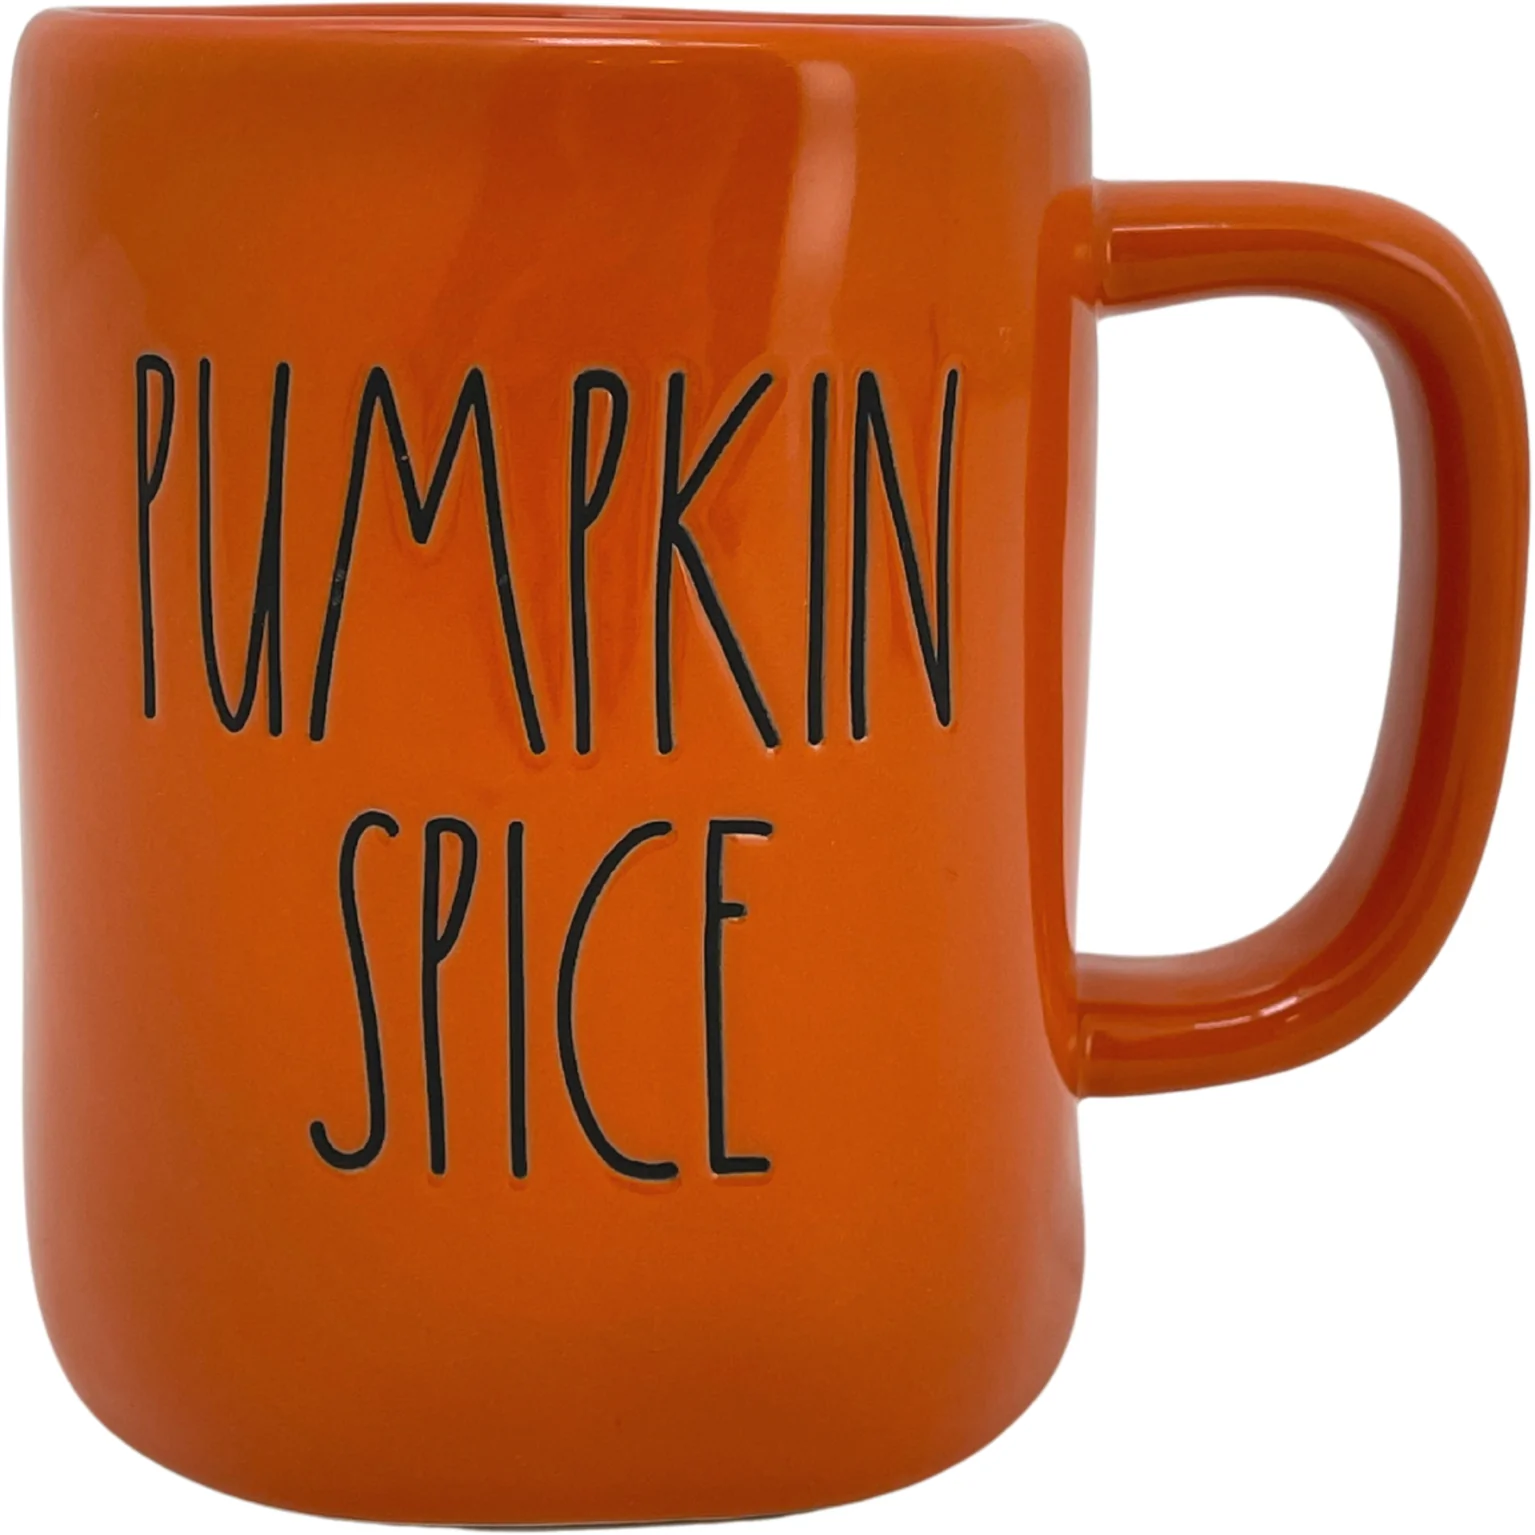 Rae Dunn "Pumpkin Spice" Coffee Mug / Ceramic Mug with Pumpkin Topper / Orange & Black